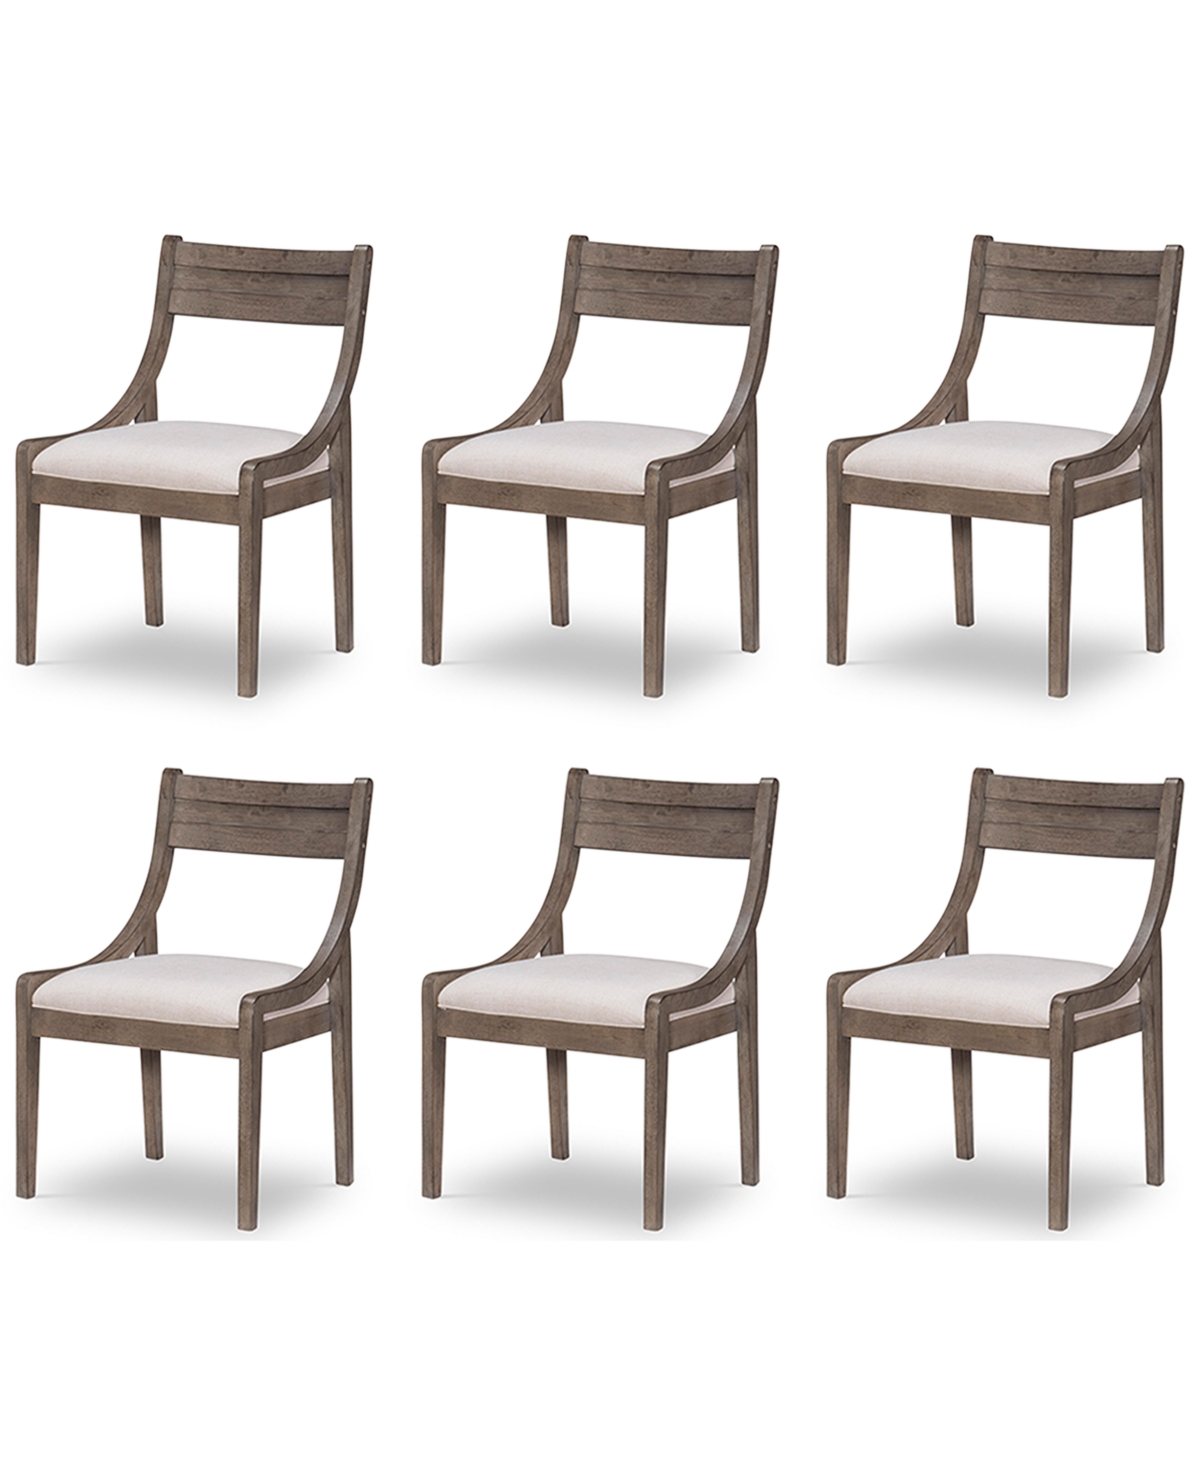 Macy's Greystone Ii Sling Back Side Chair 6pc Set